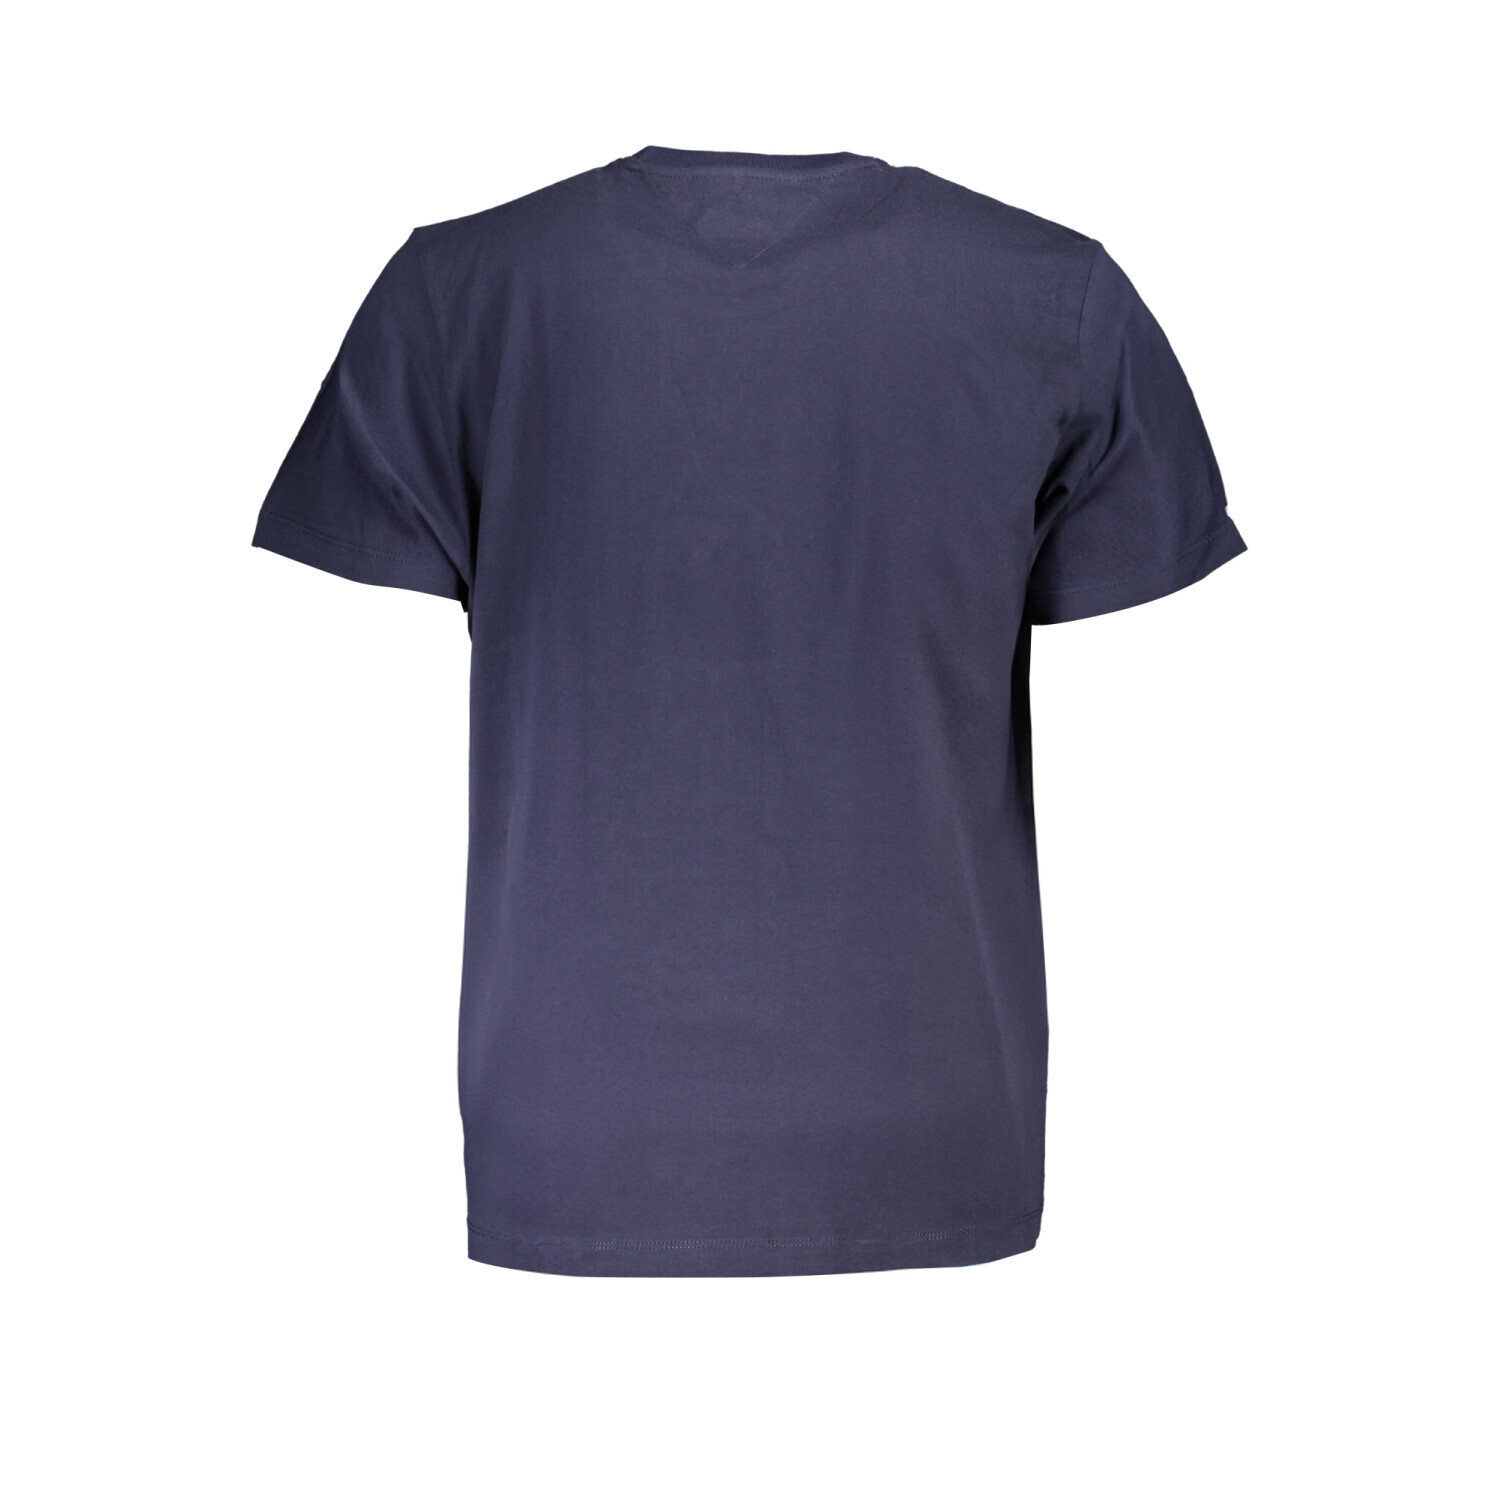 Tshirt Tommy HIlfiger Bege Logo - Comprar Online